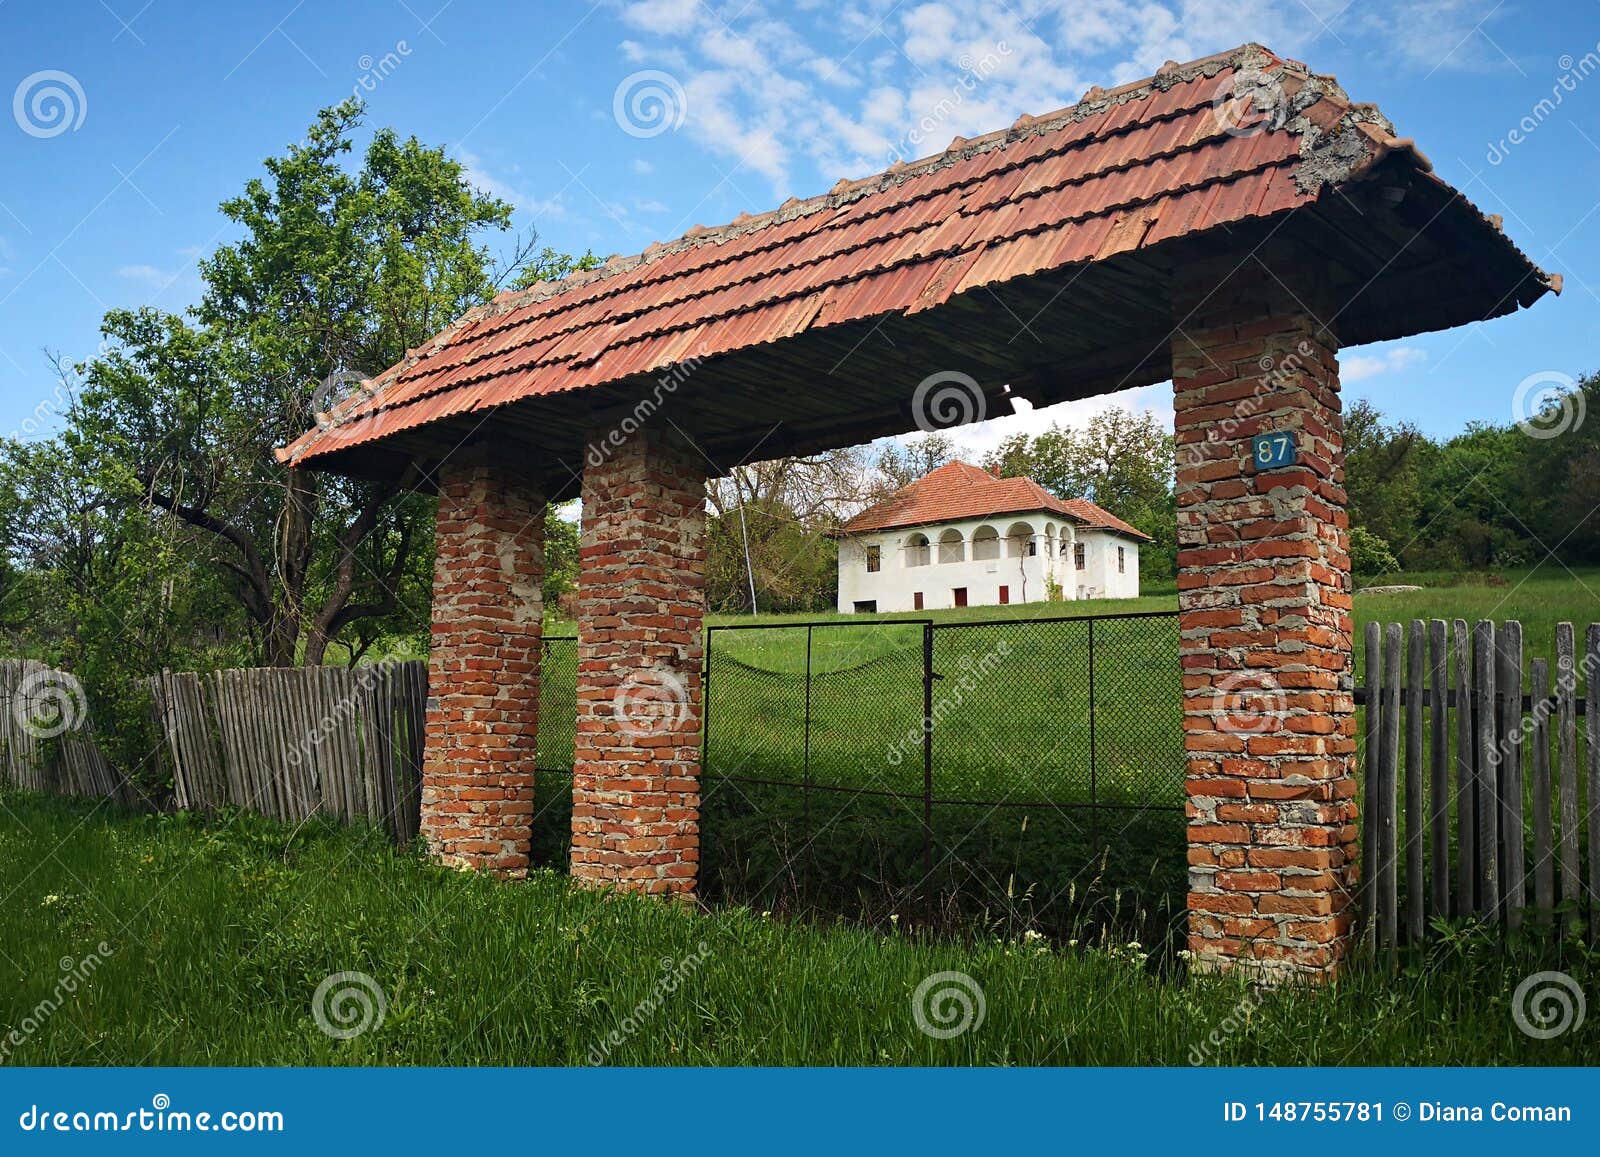 manly exempt Troubled Old White Mansion in Rural Landscape Stock Image - Image of building,  cottage: 148755781